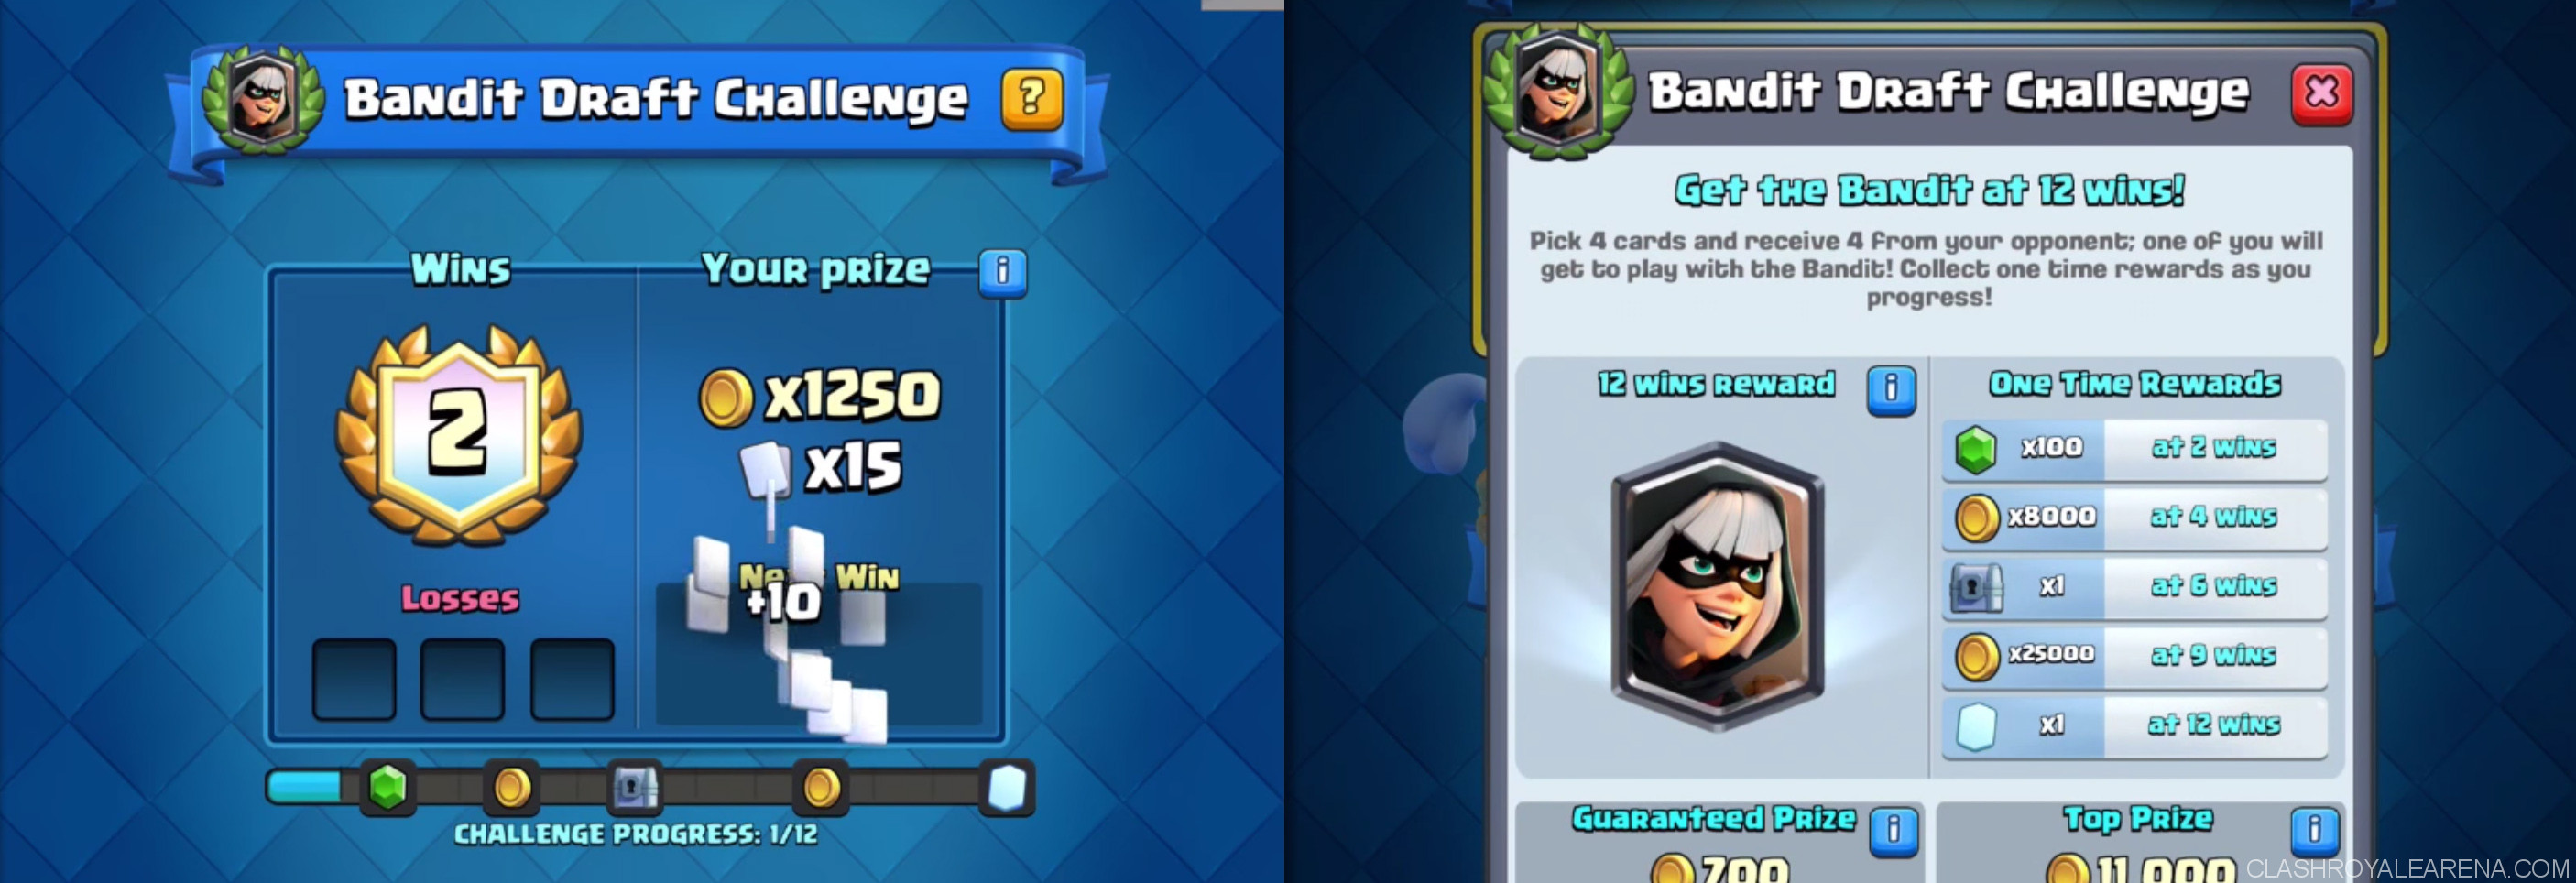 bandit draft challenge